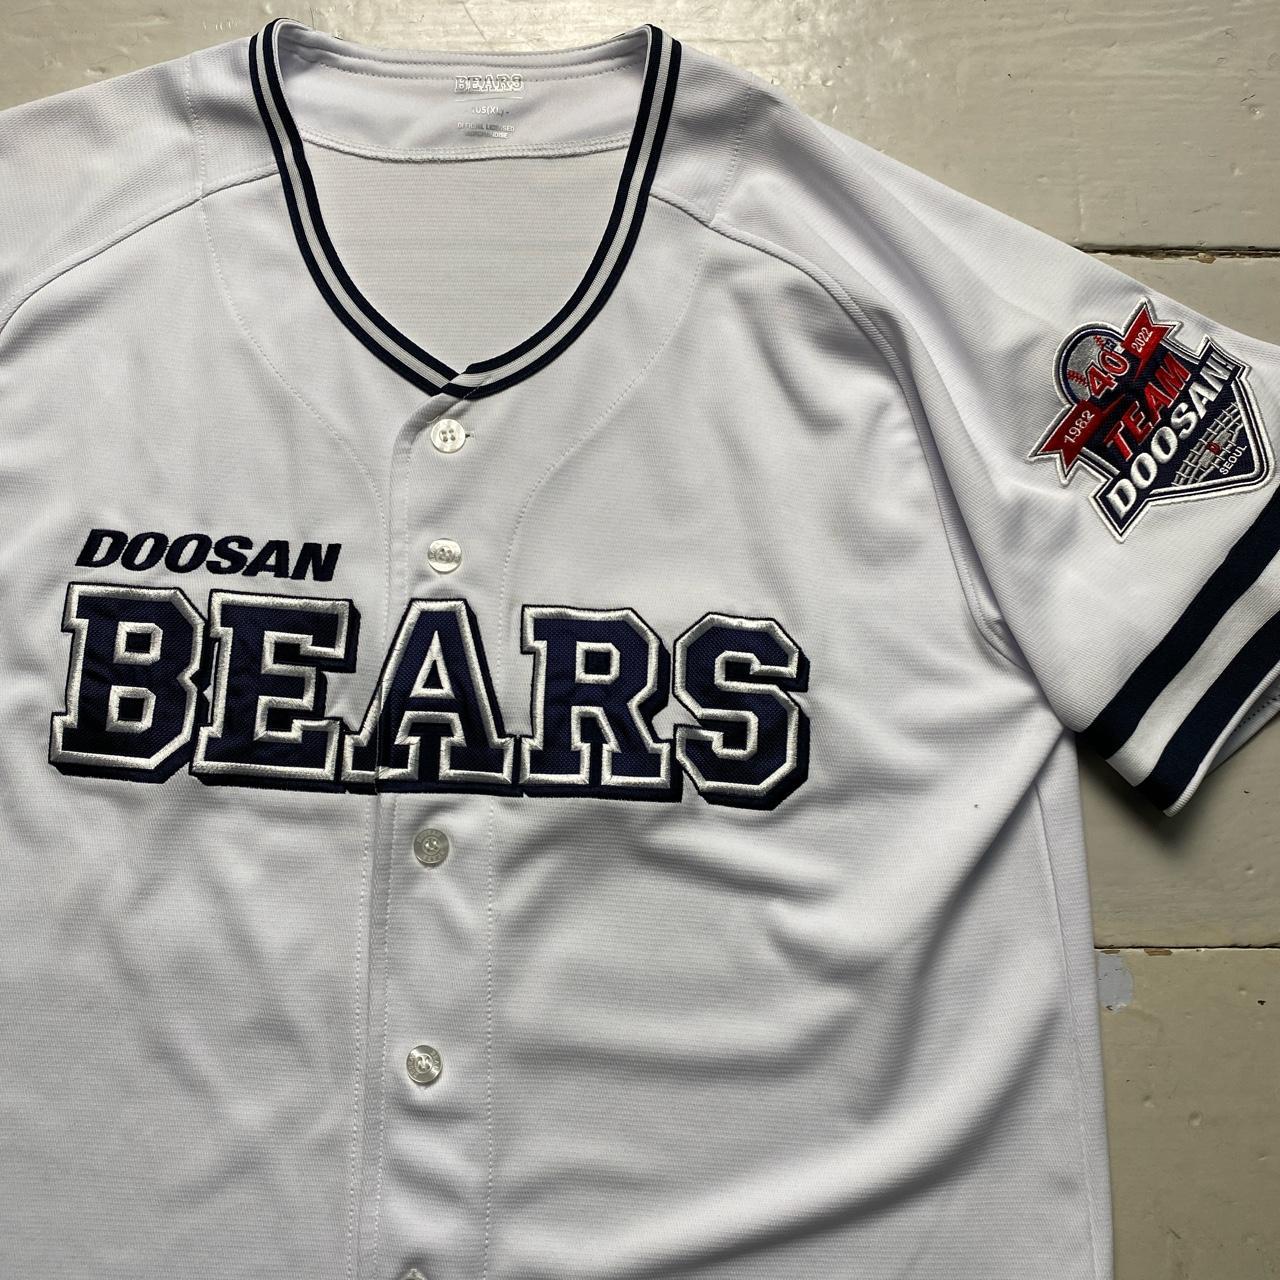 Doosan Bears Baseball Vintage Jersey White Navy and - Depop